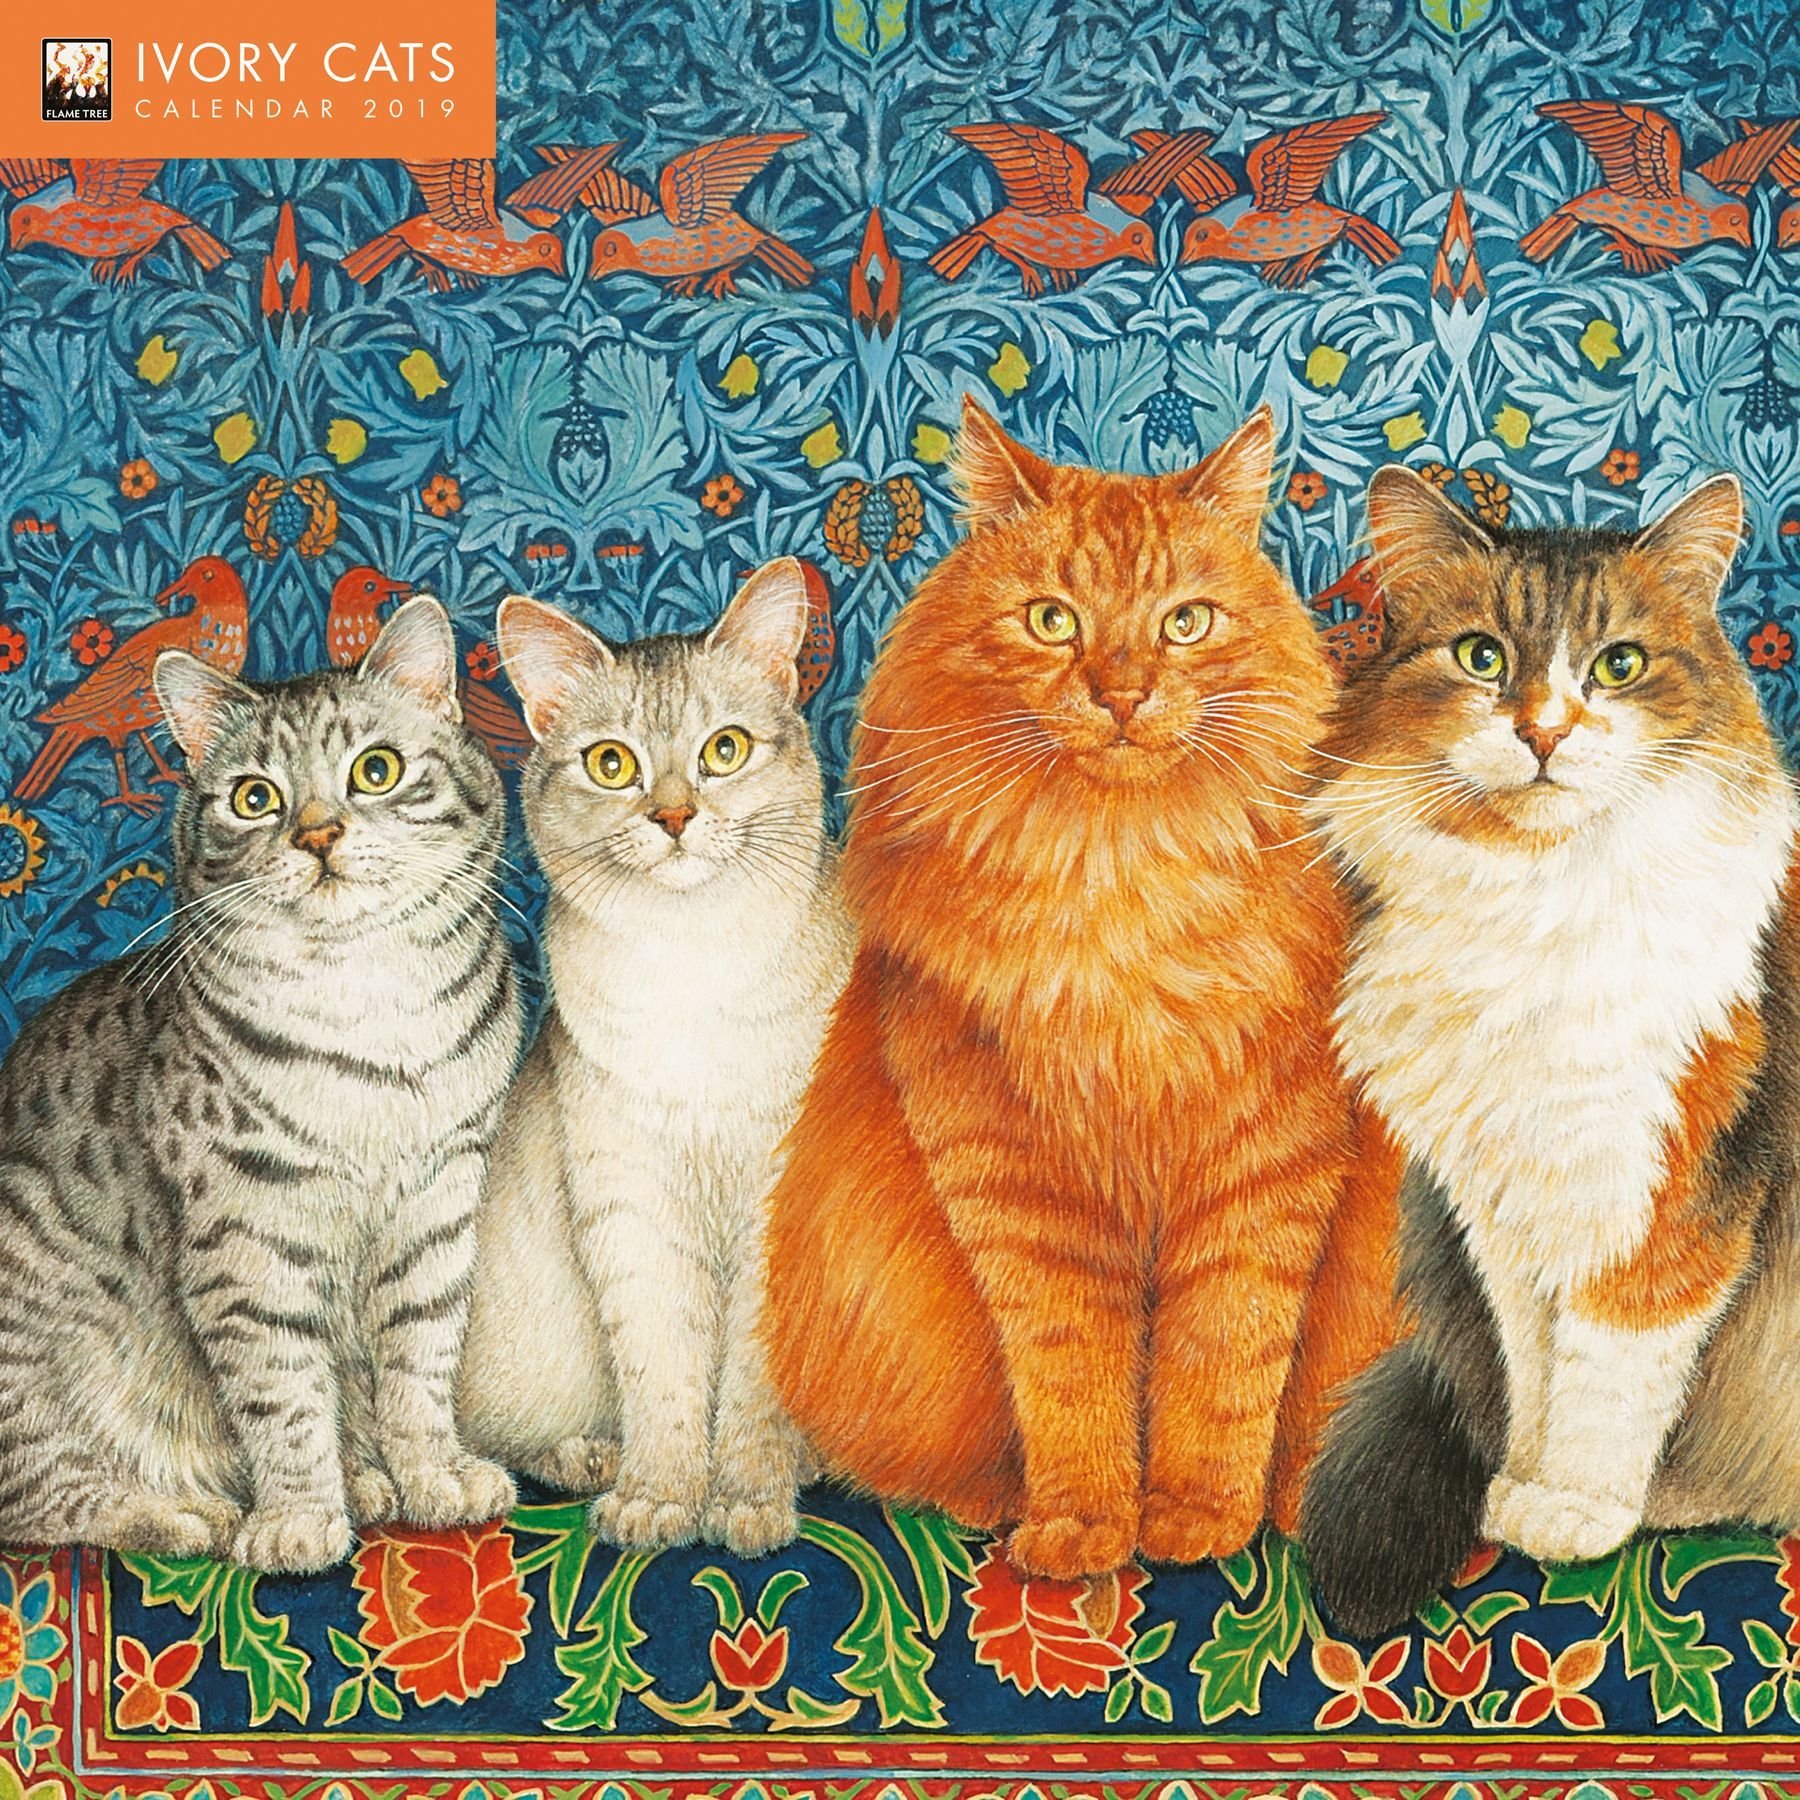 Buy Ivory Cats Wall Calendar 2019 (Art Calendar) by Flame Tree Studio